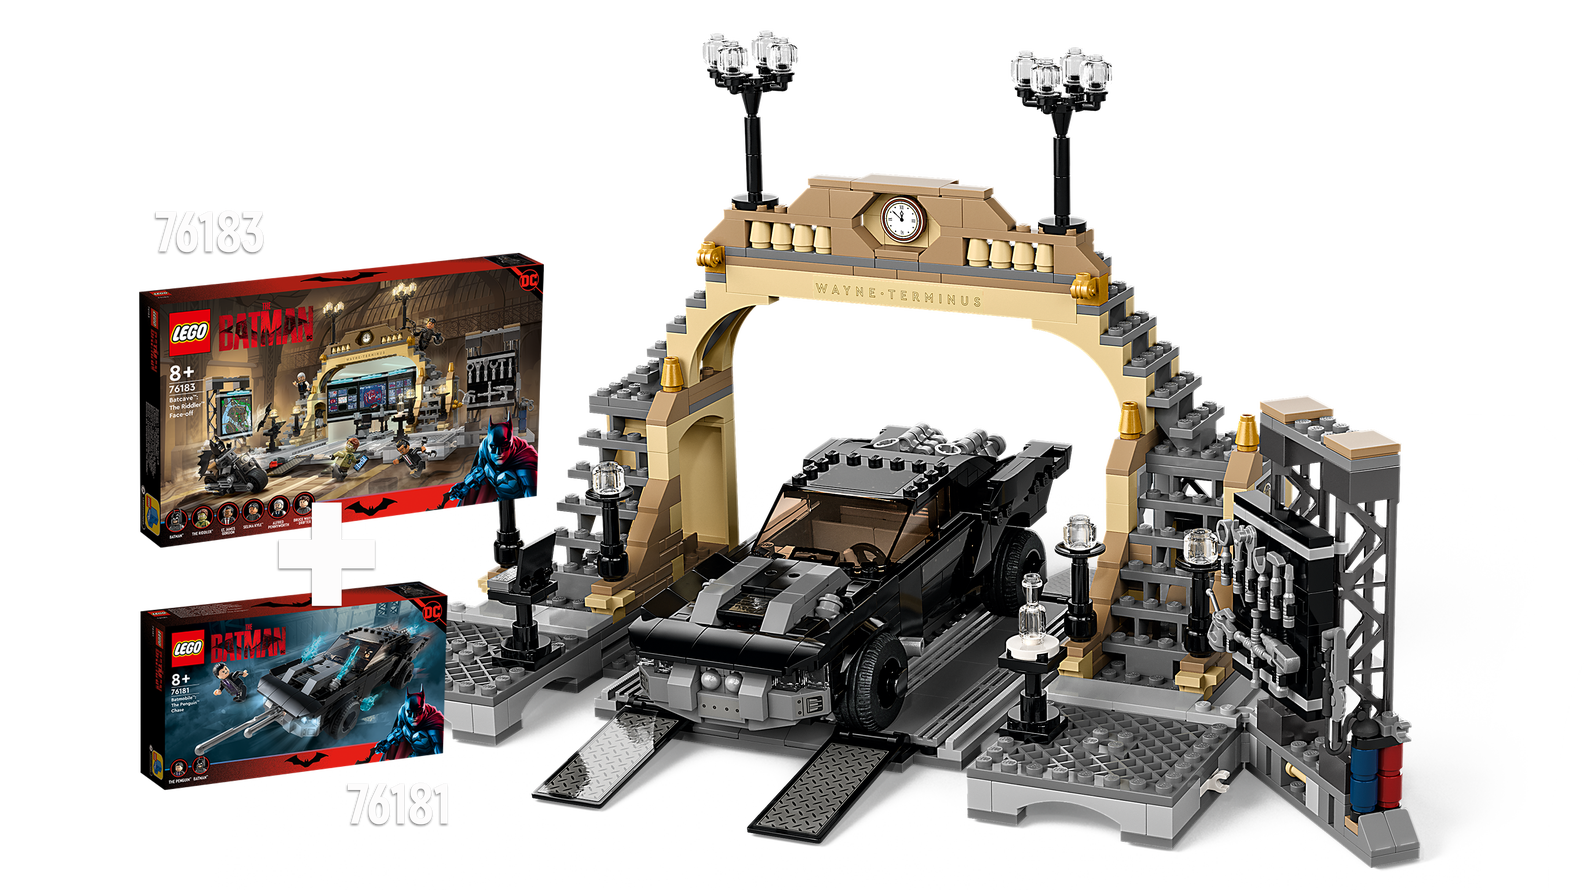 LEGO 76183 Batcave™: The Riddler™ Face-off (Бэтпещера: схватка с Загадочником)